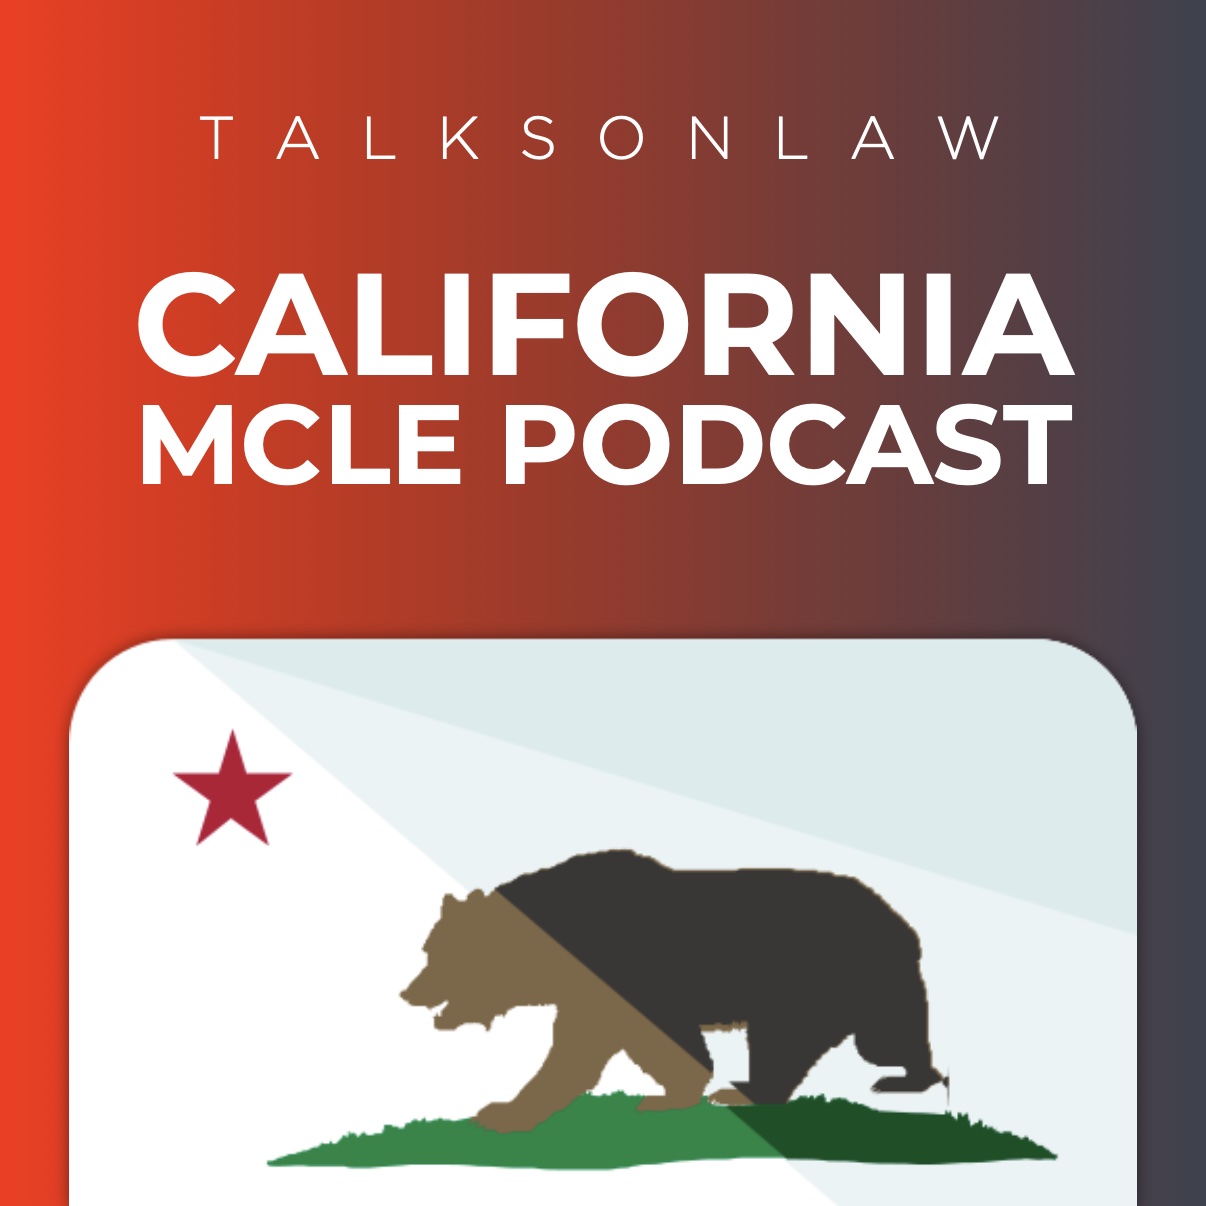 California mcle podcast logo